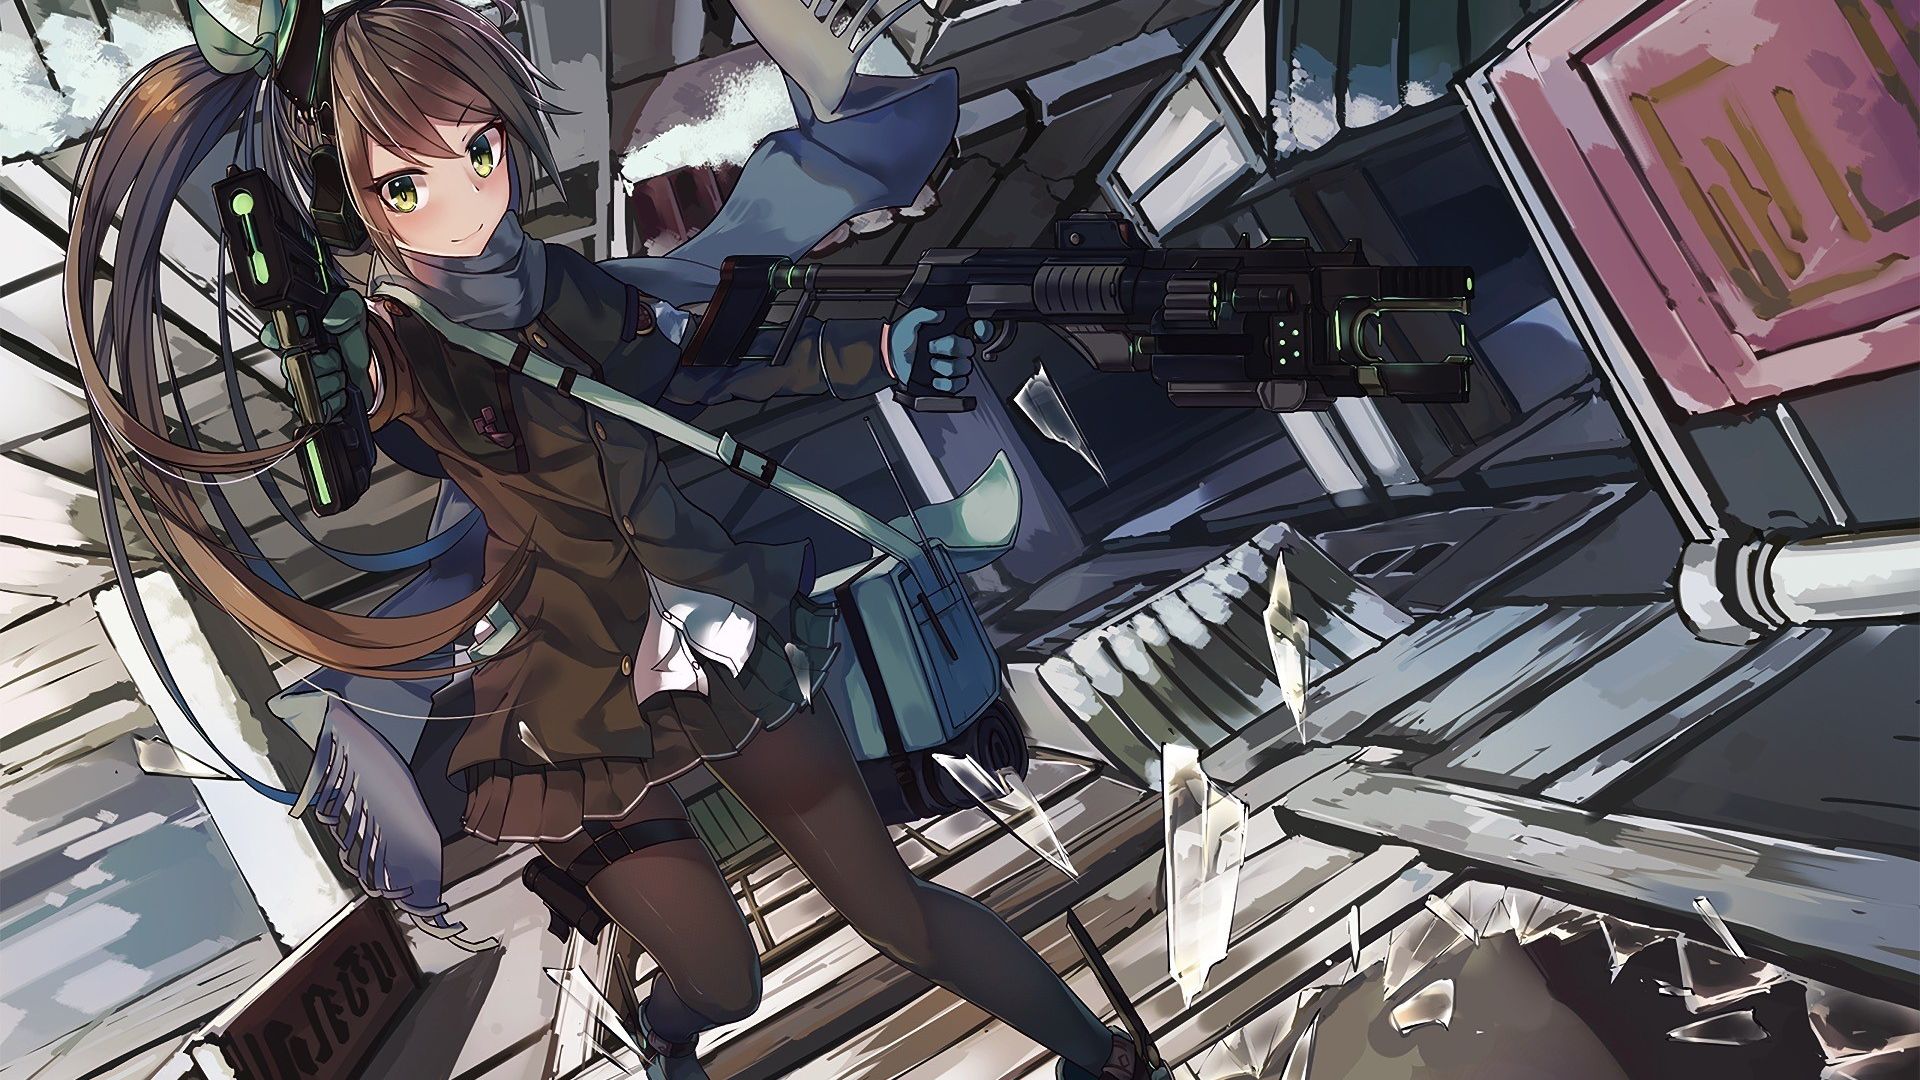 Desktop Wallpaper Fight, Cute Anime Girl, Original, Hd Image, Picture,  Background, 9ef411